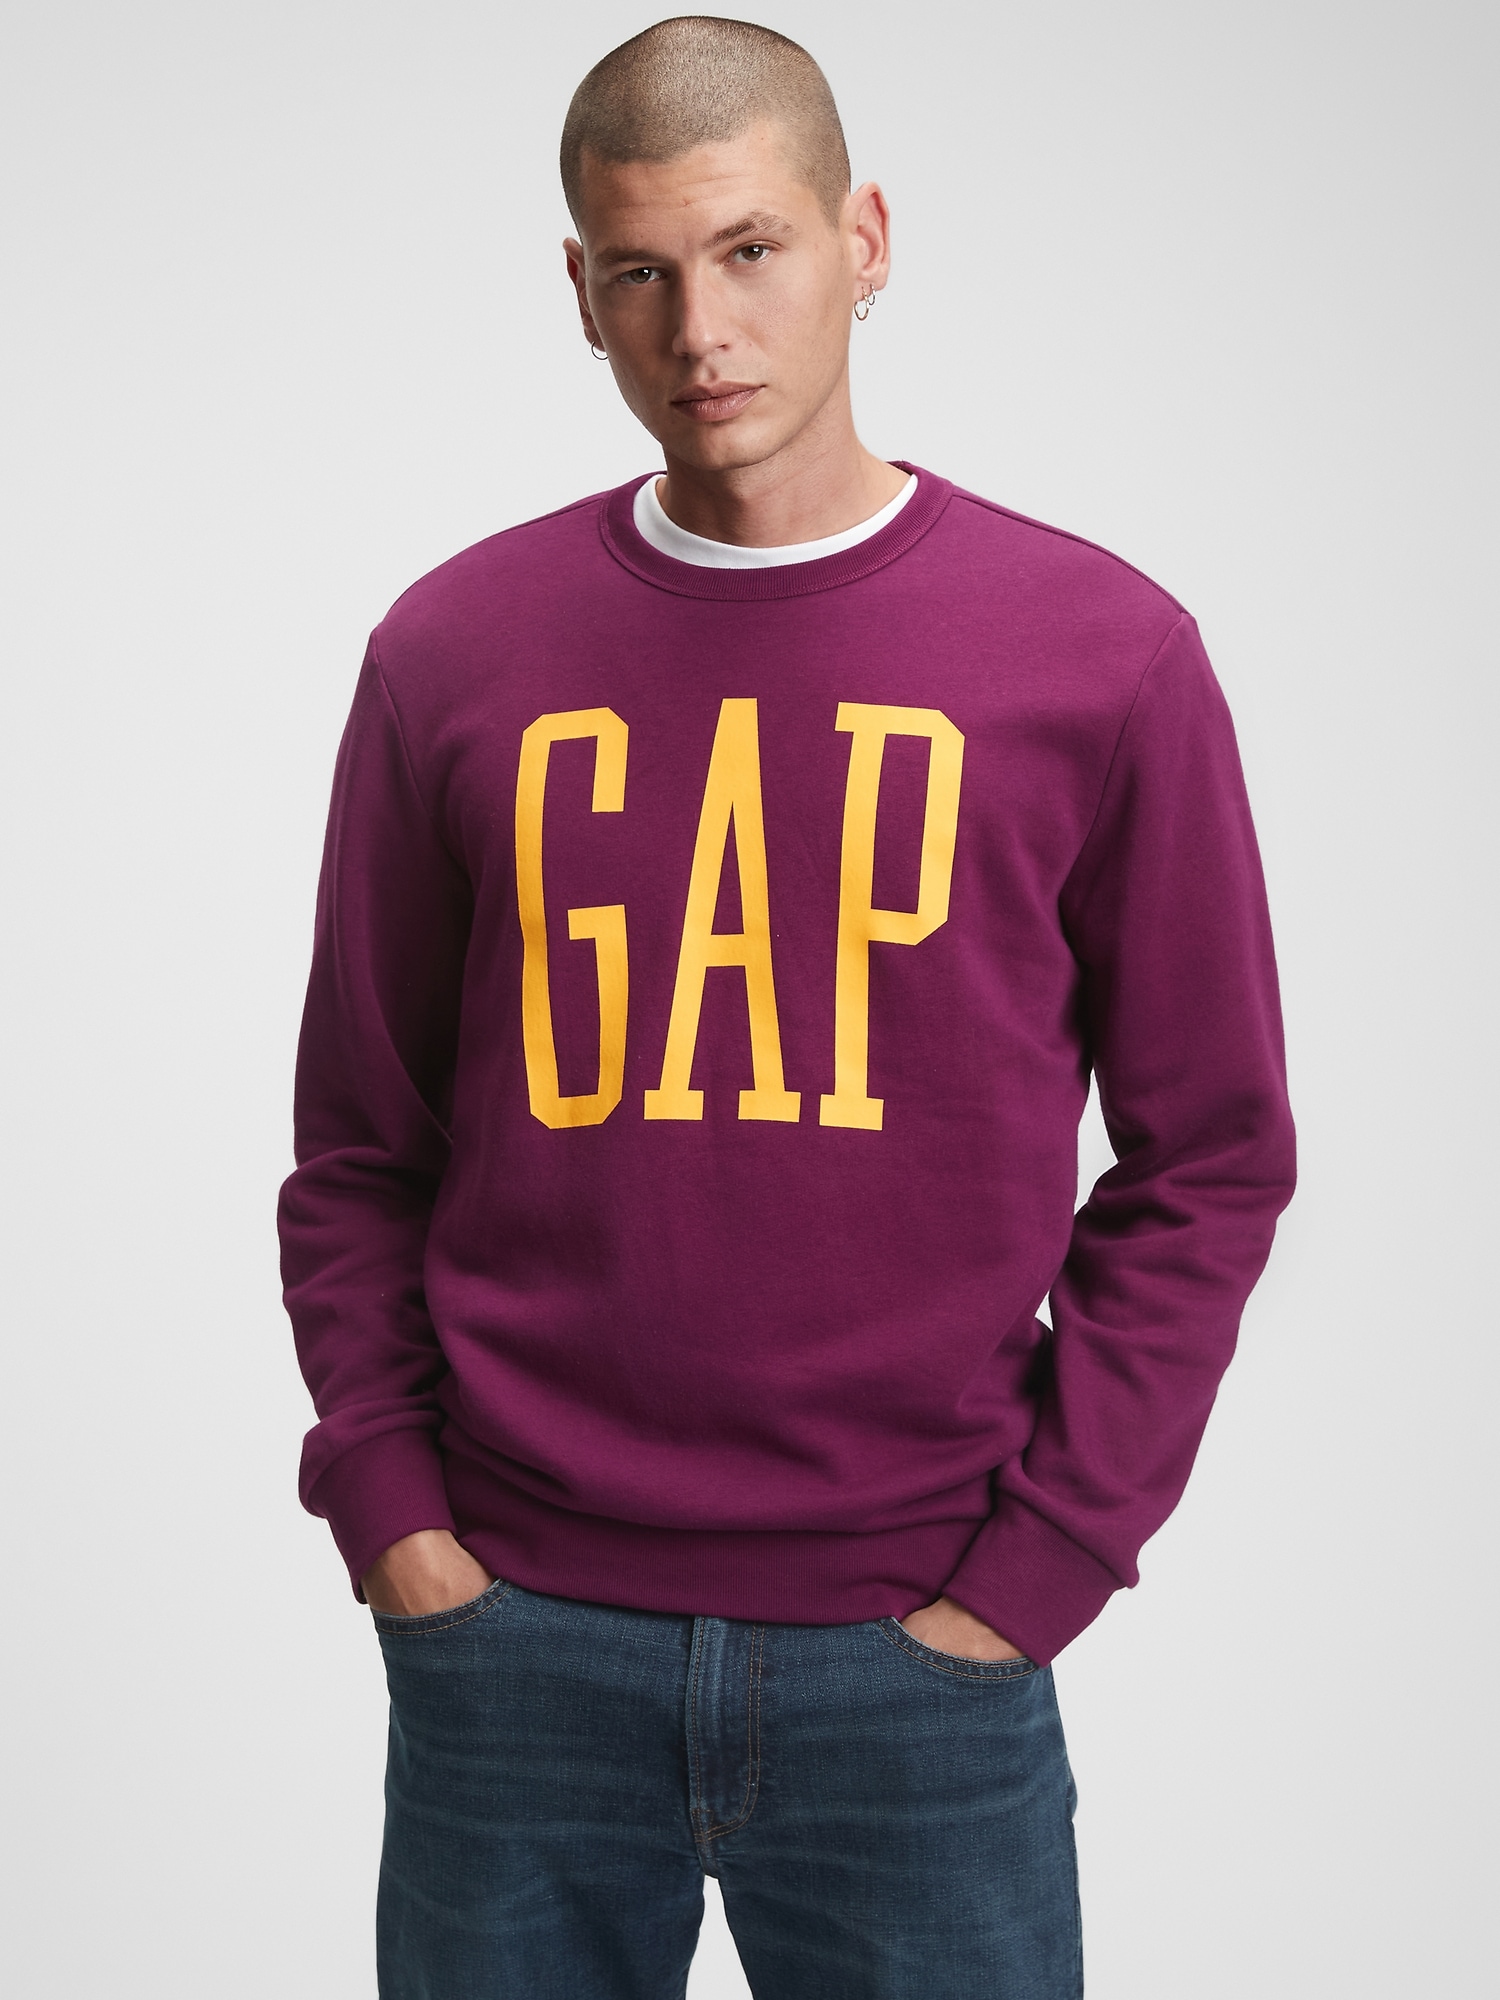 Gap Logo Pullover Sweatshirt | Gap Factory